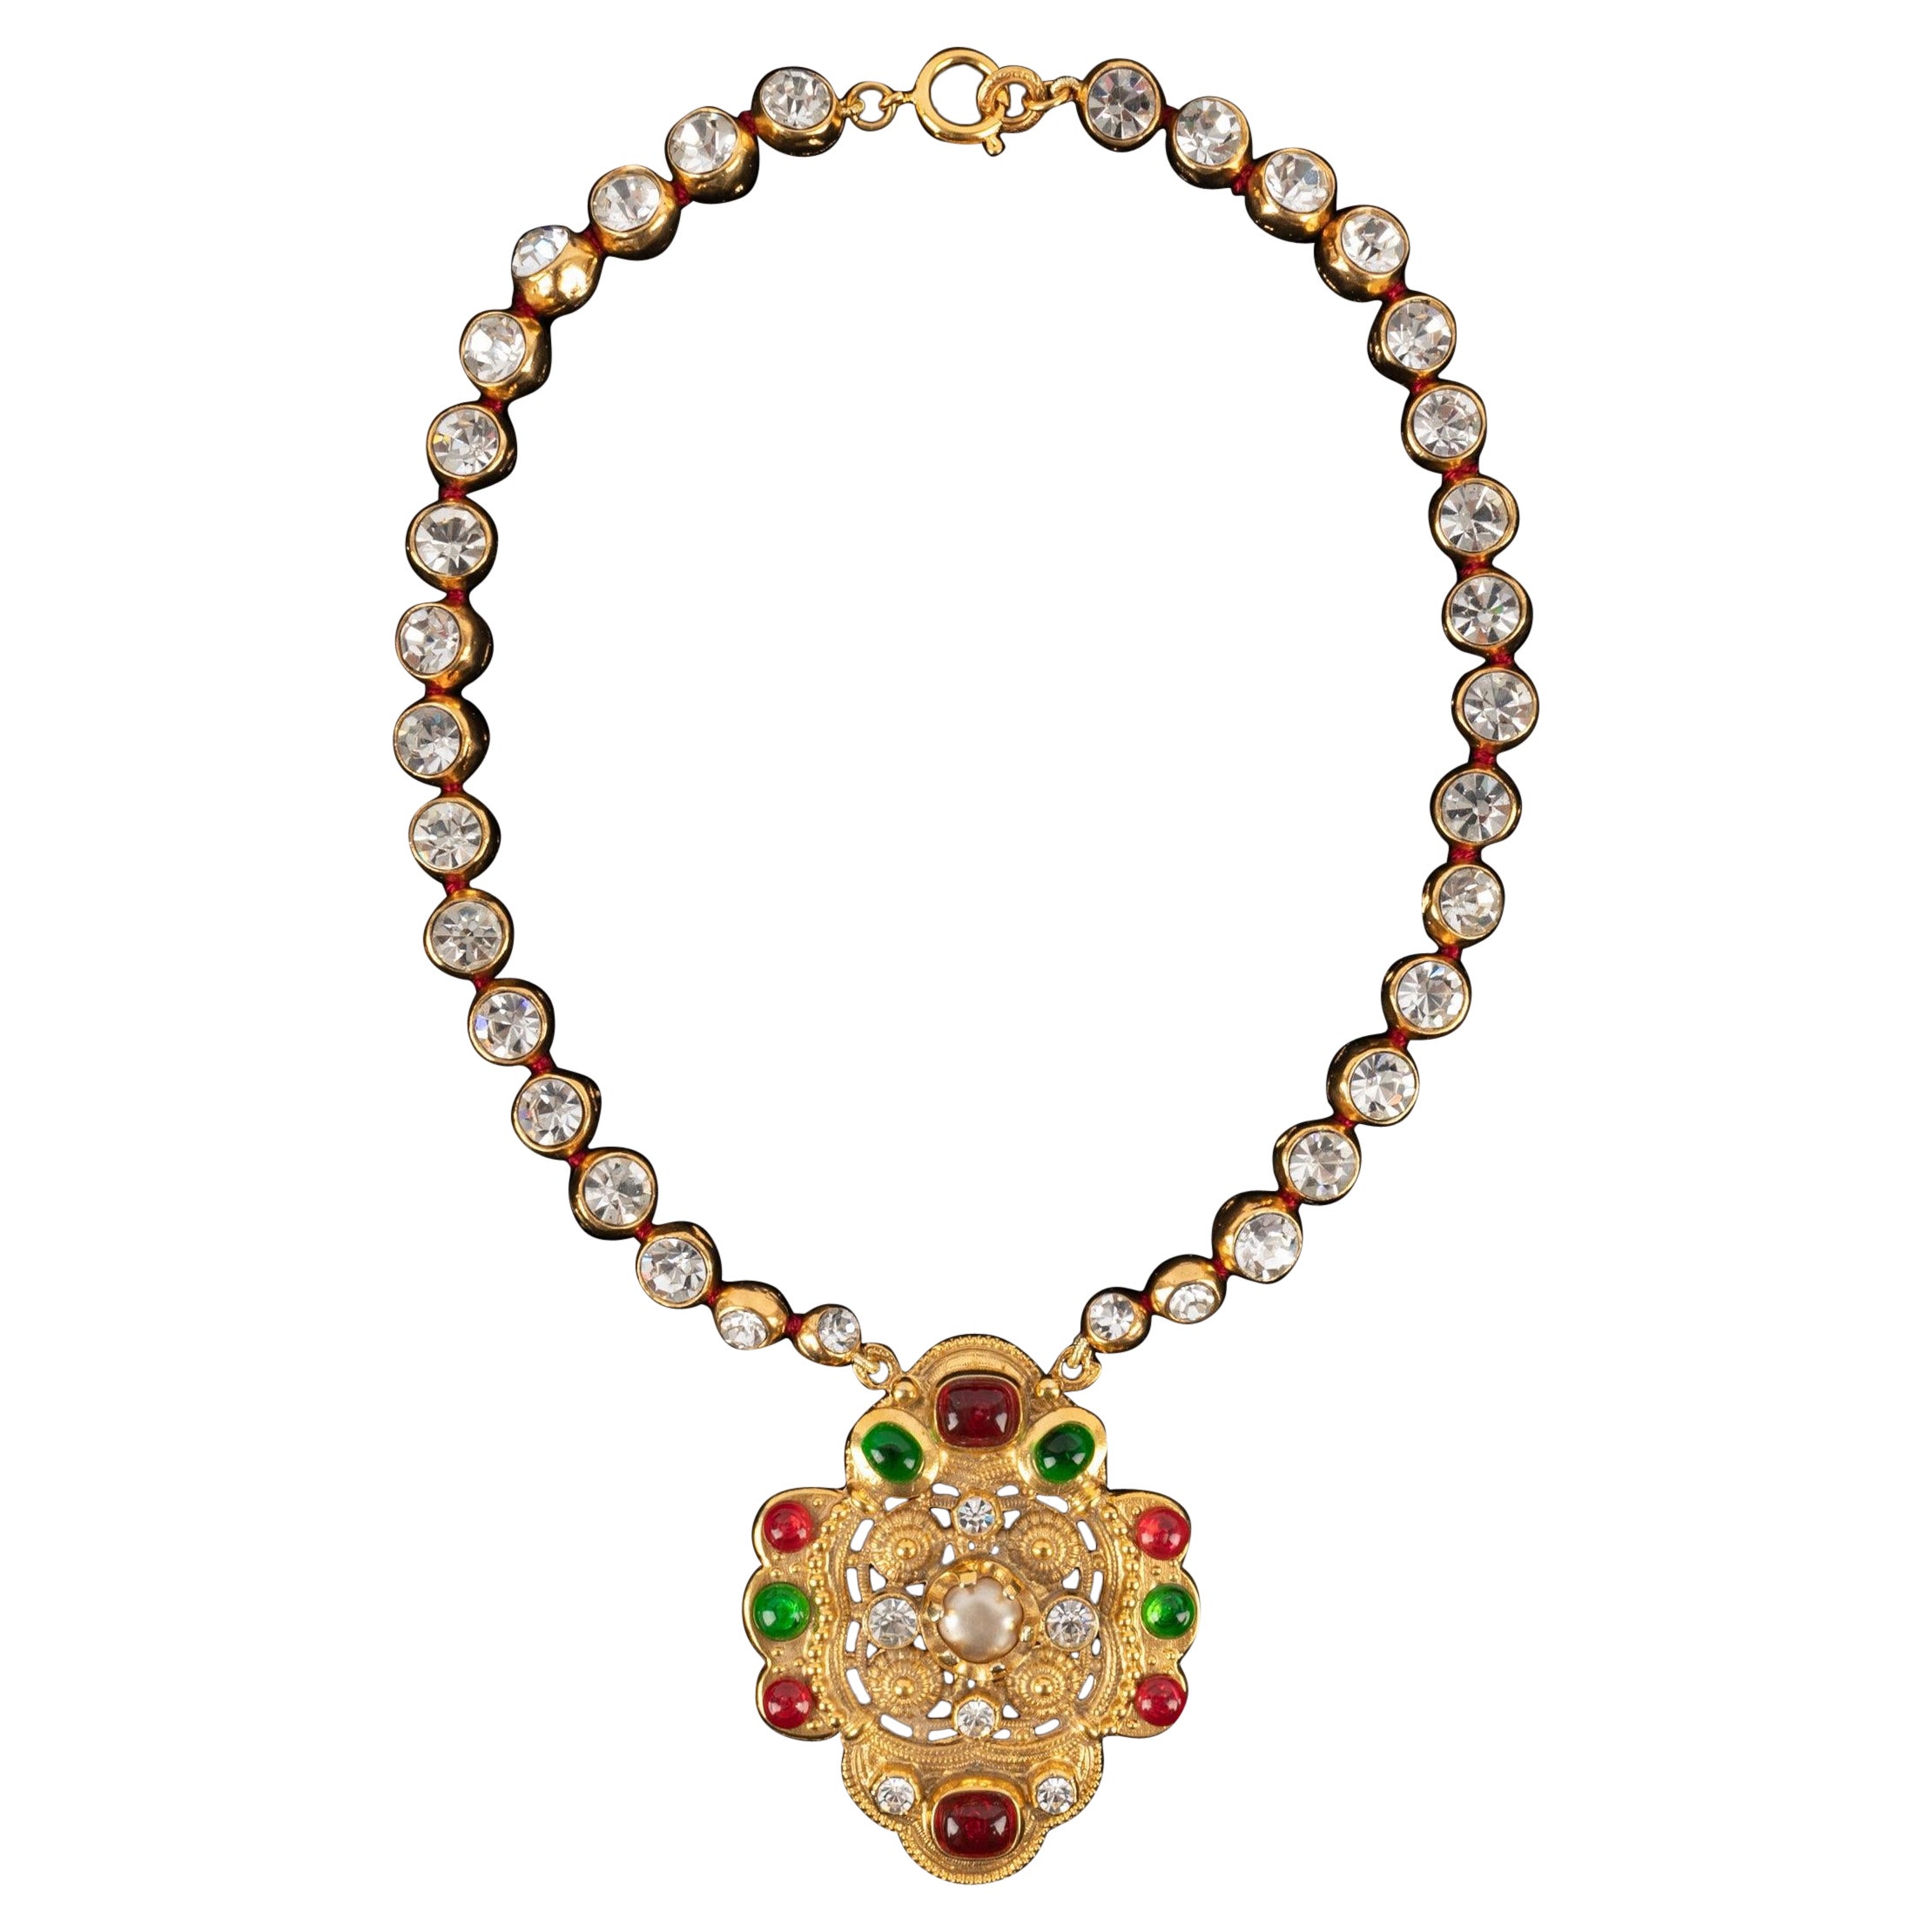 Fashion Jewelry Pendant Necklaces